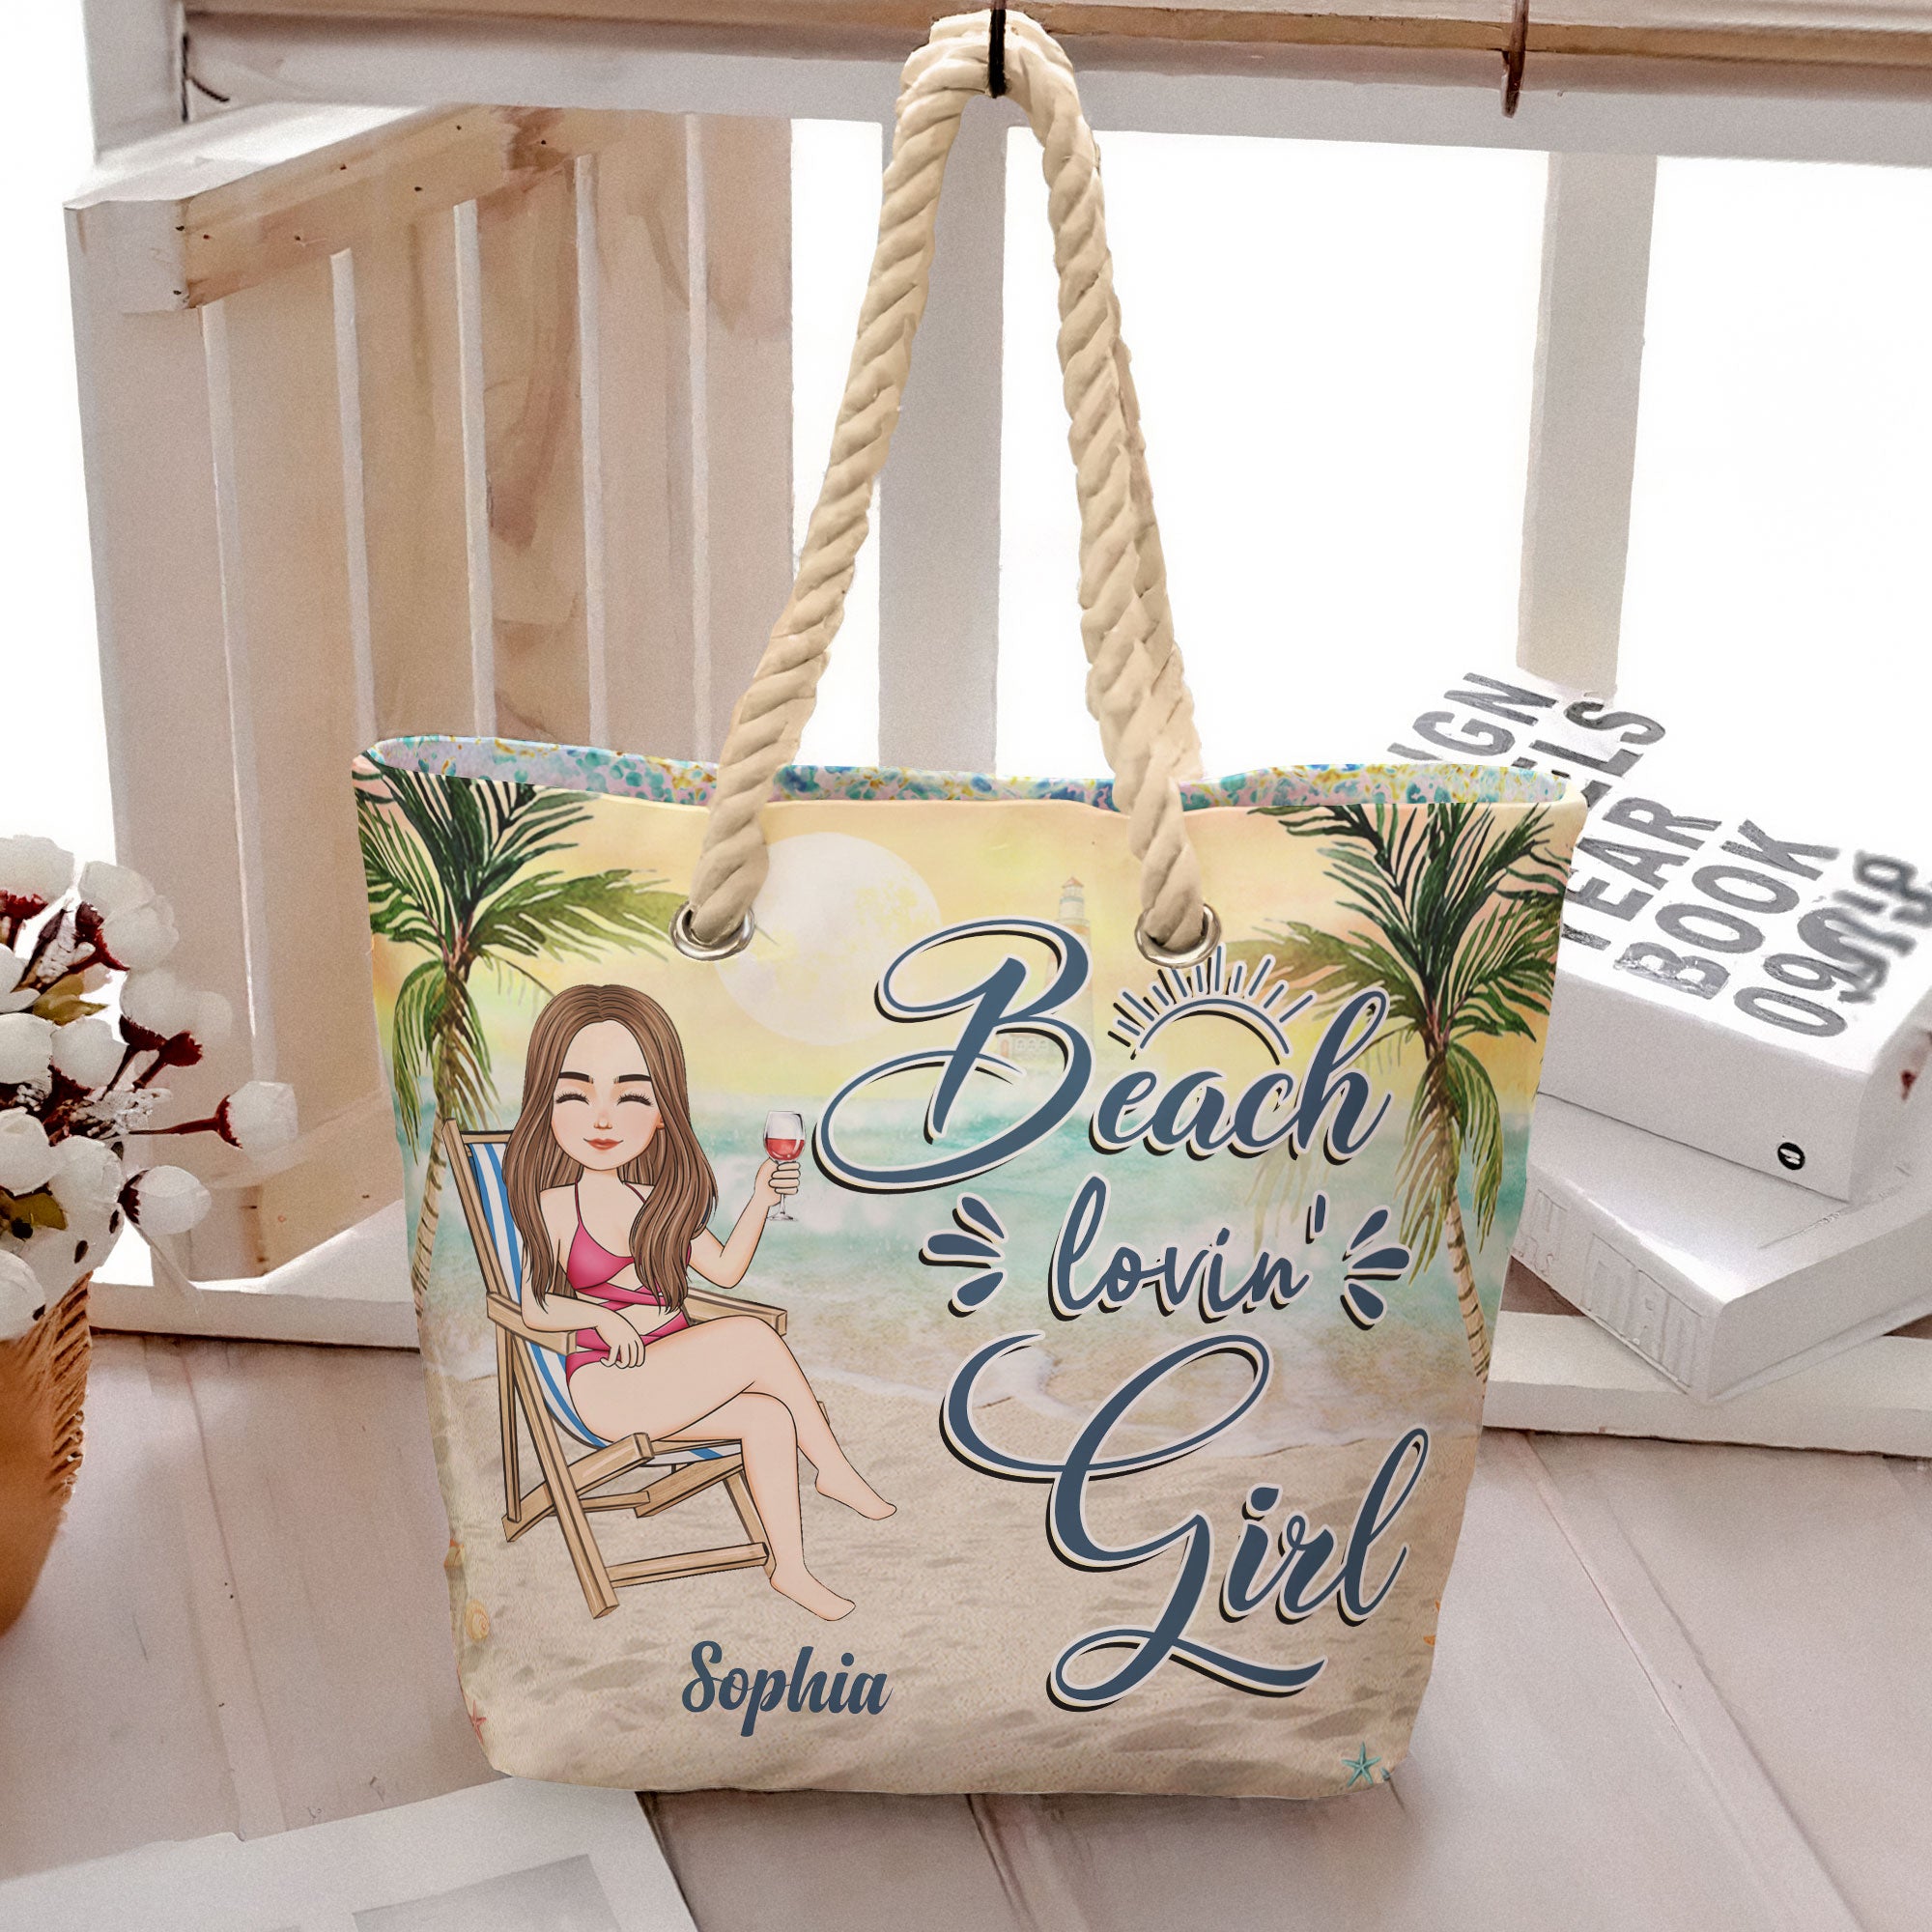 Beach Lovin' Girl - Personalized Beach Bag